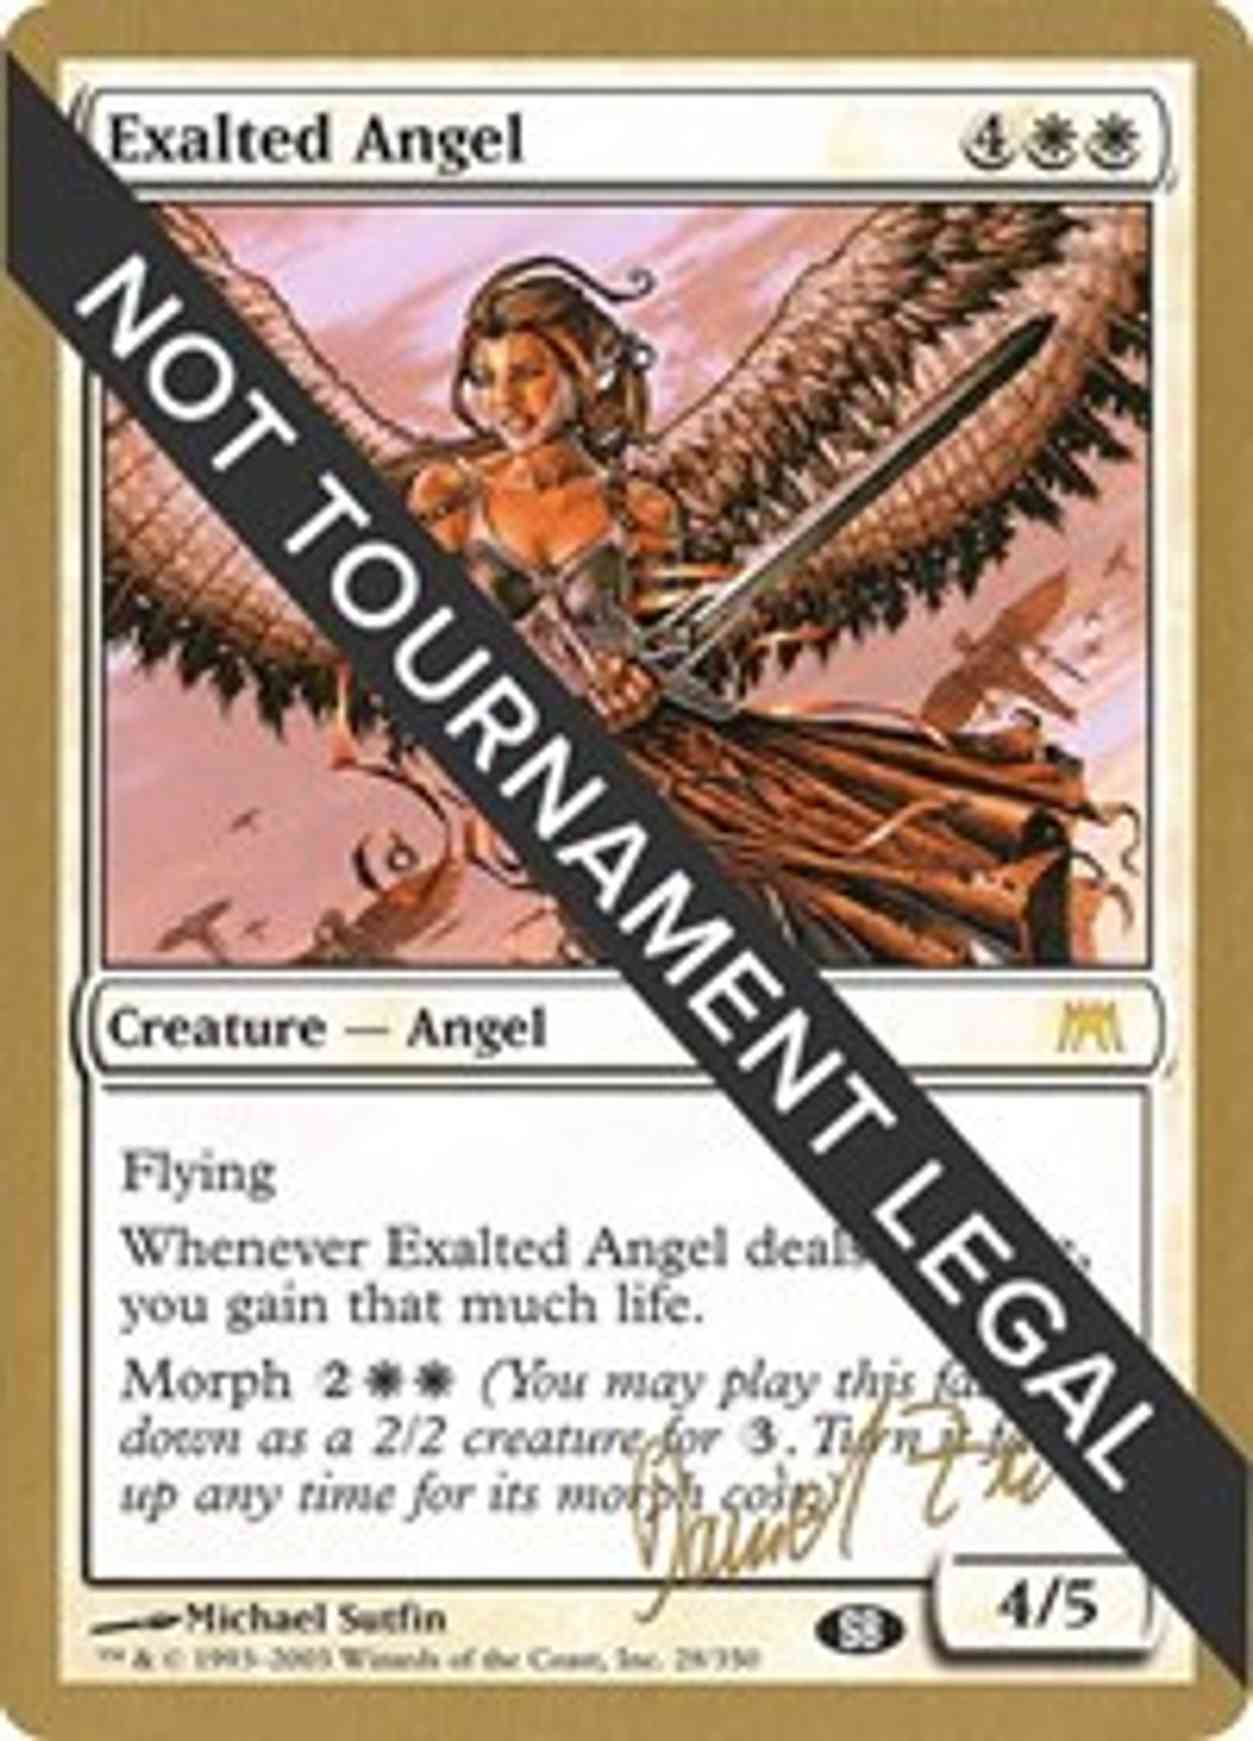 Exalted Angel - 2003 Daniel Zink (ONS) (SB) magic card front